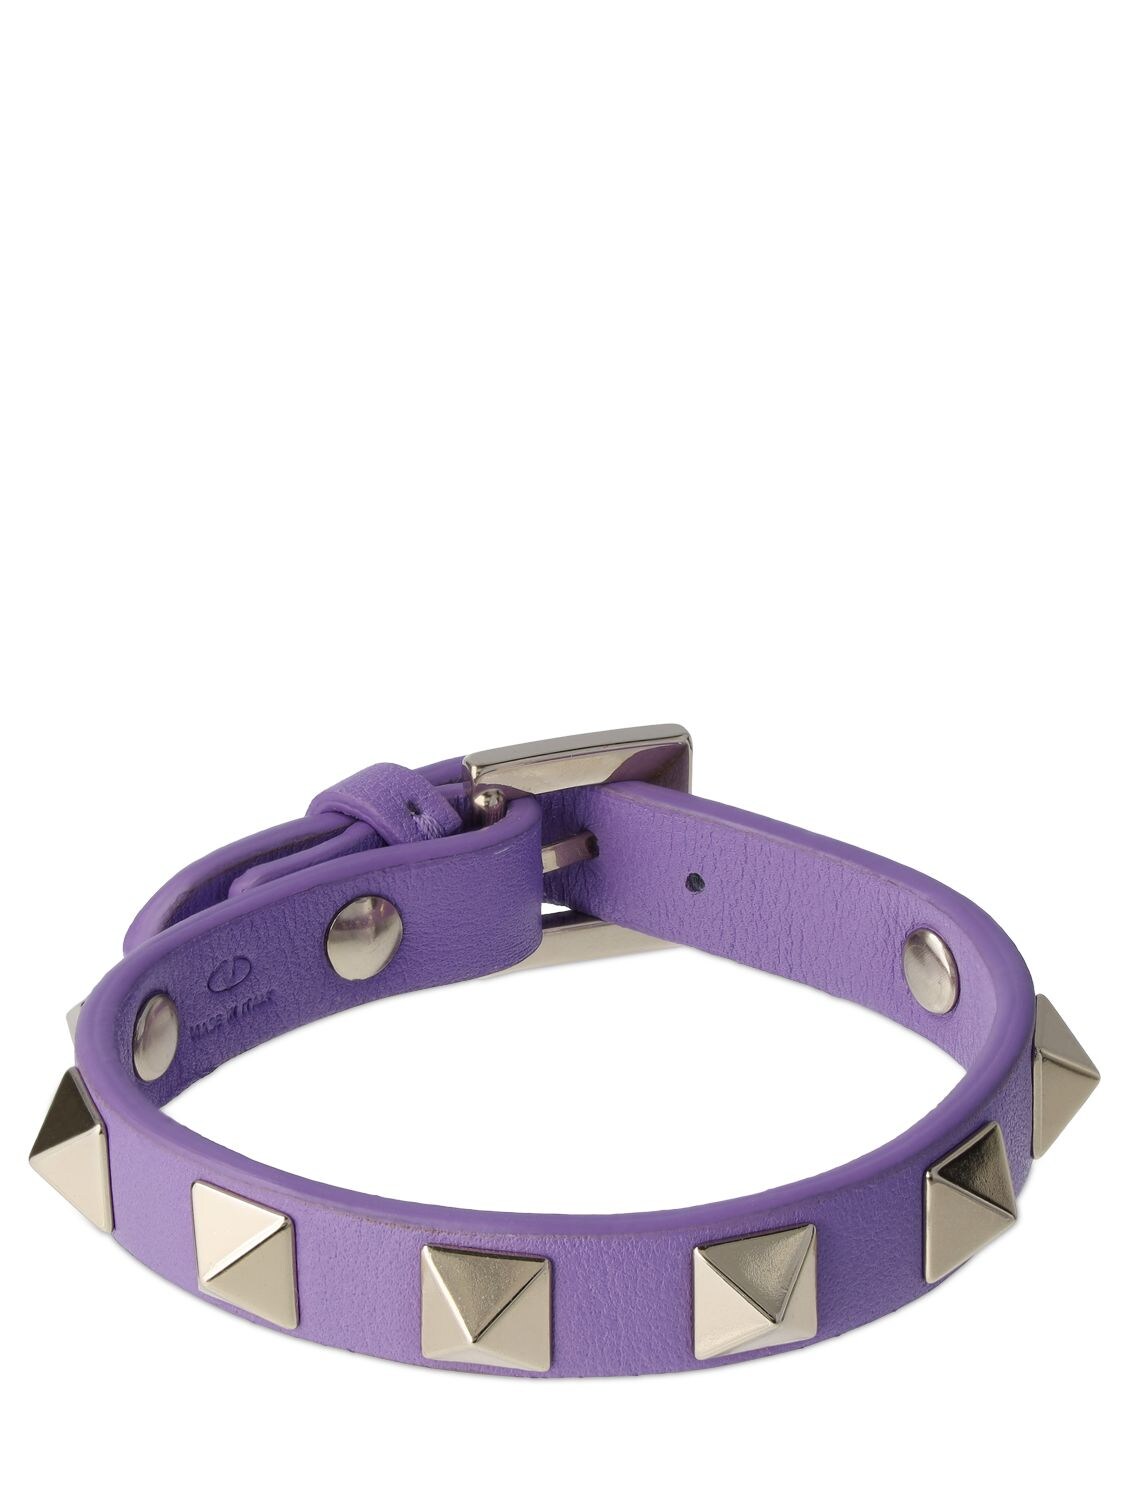 VALENTINO GARAVANI Rockstud Leather Belt Bracelet